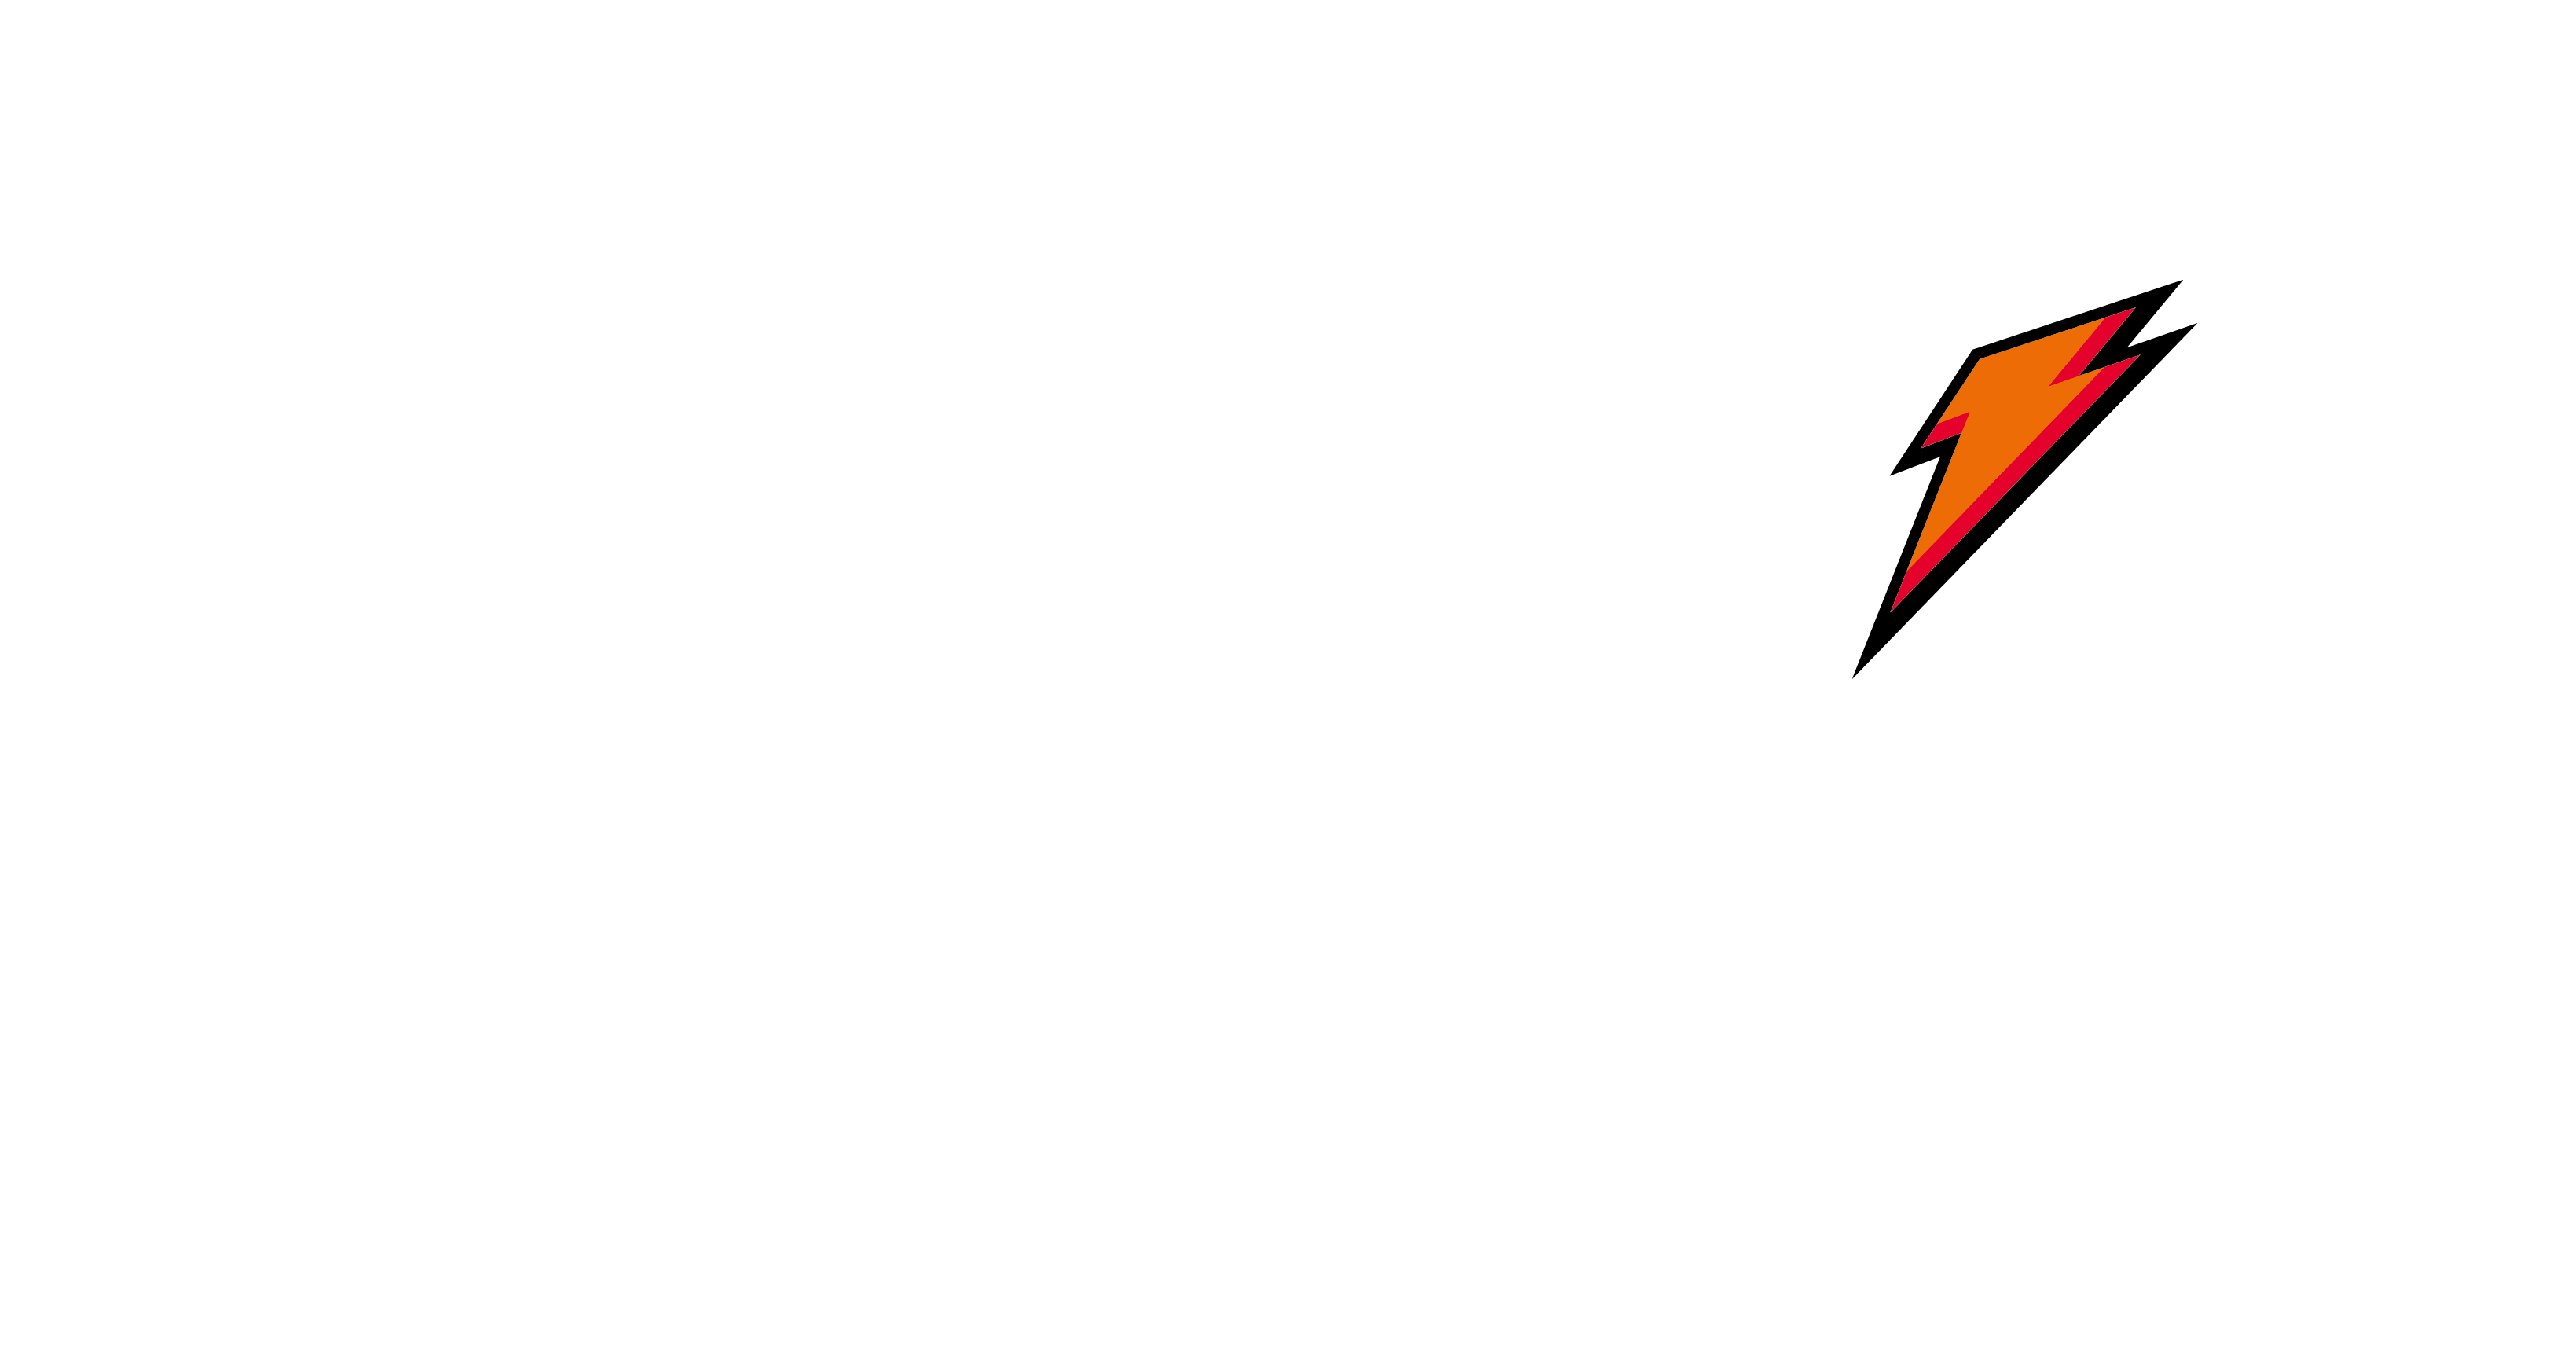 Champions League.  Gatorade - orgulloso patrocinador